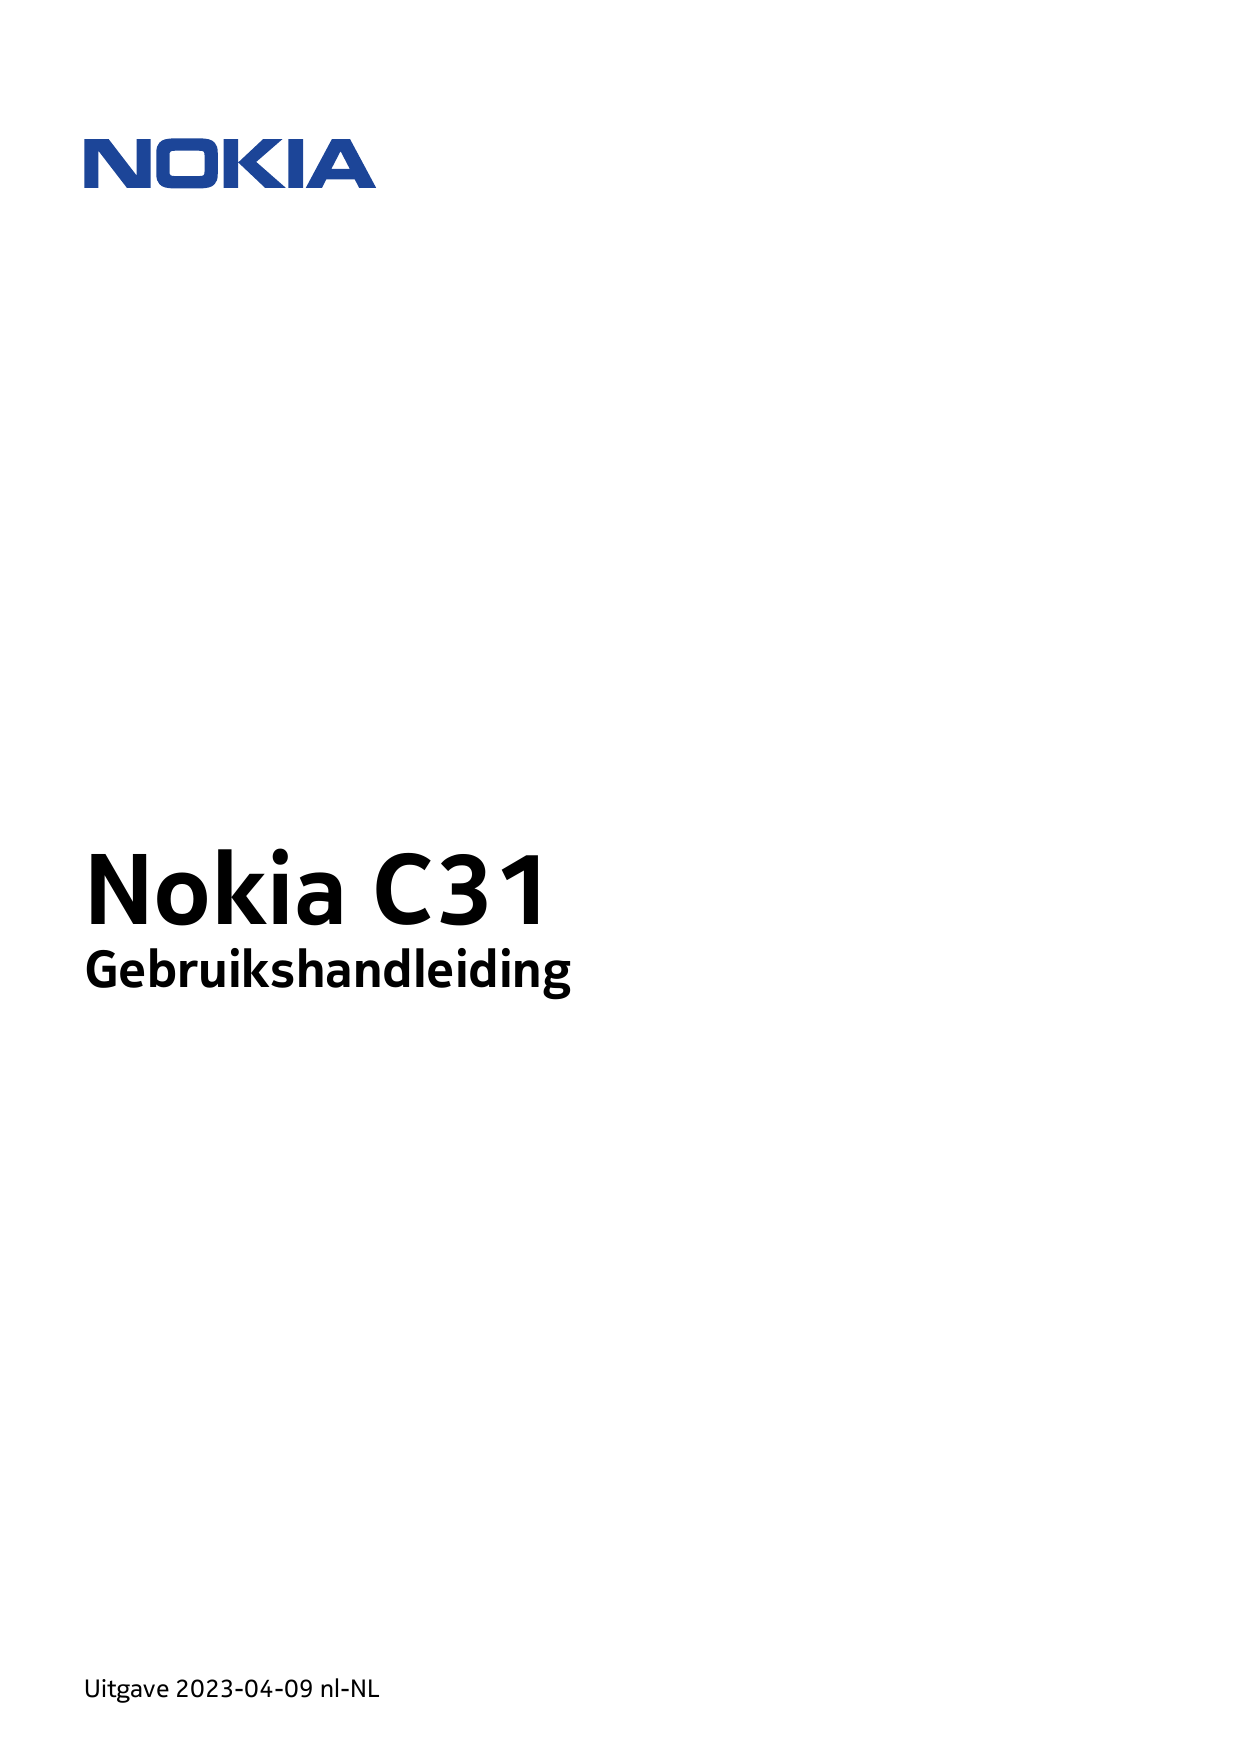 Nokia C31GebruikshandleidingUitgave 2023-04-09 nl-NL